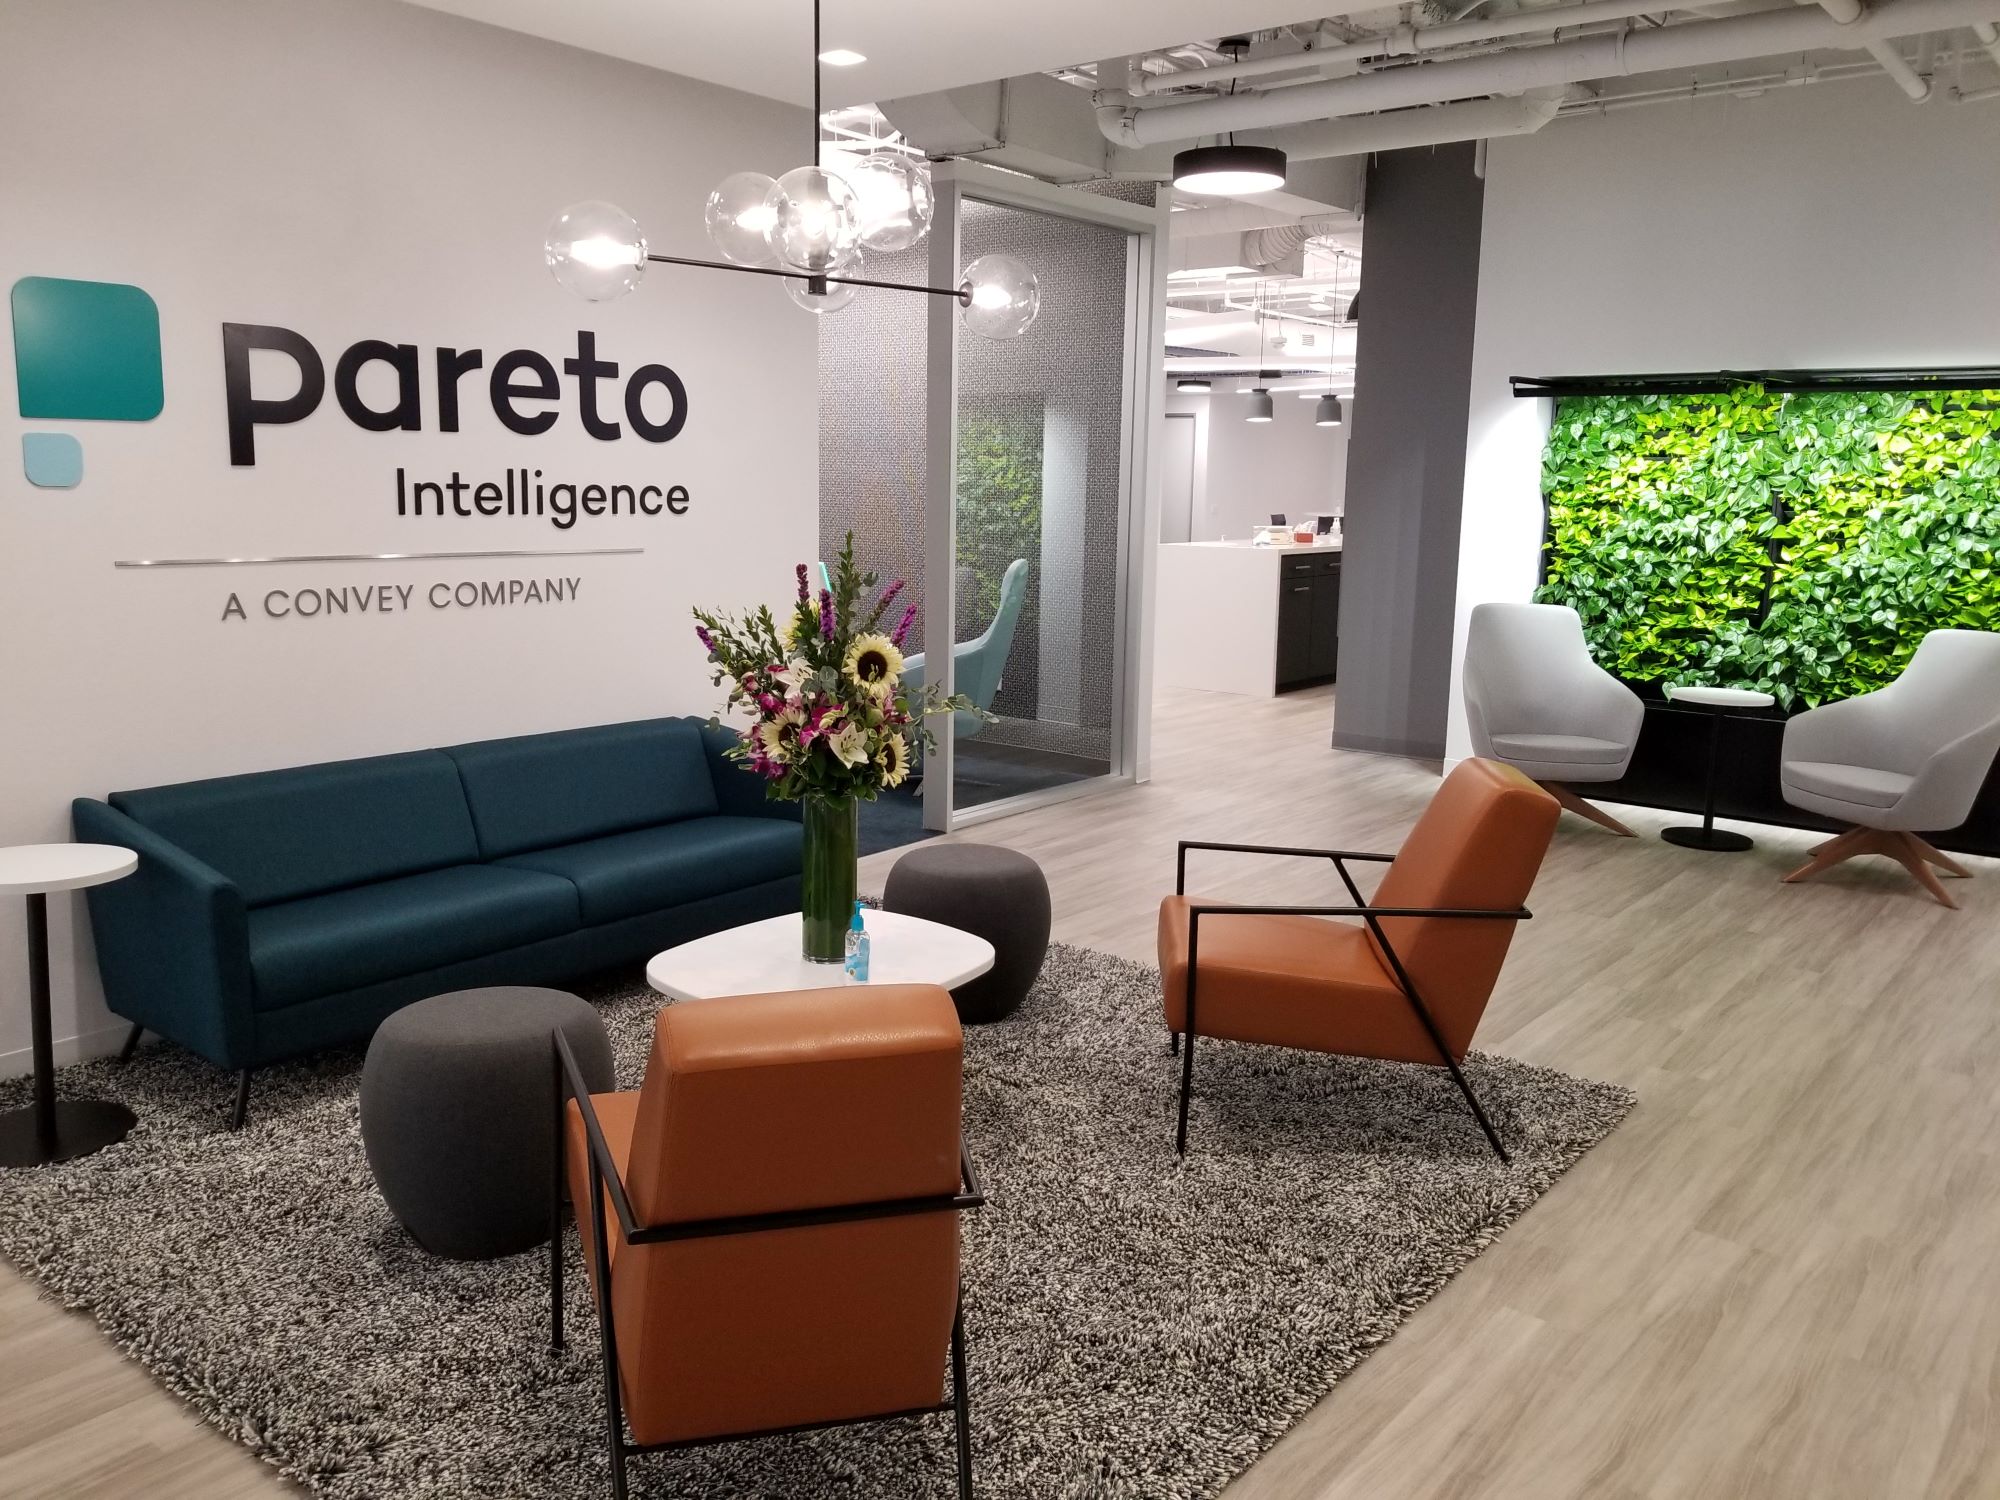 The Pareto Intelligence Office